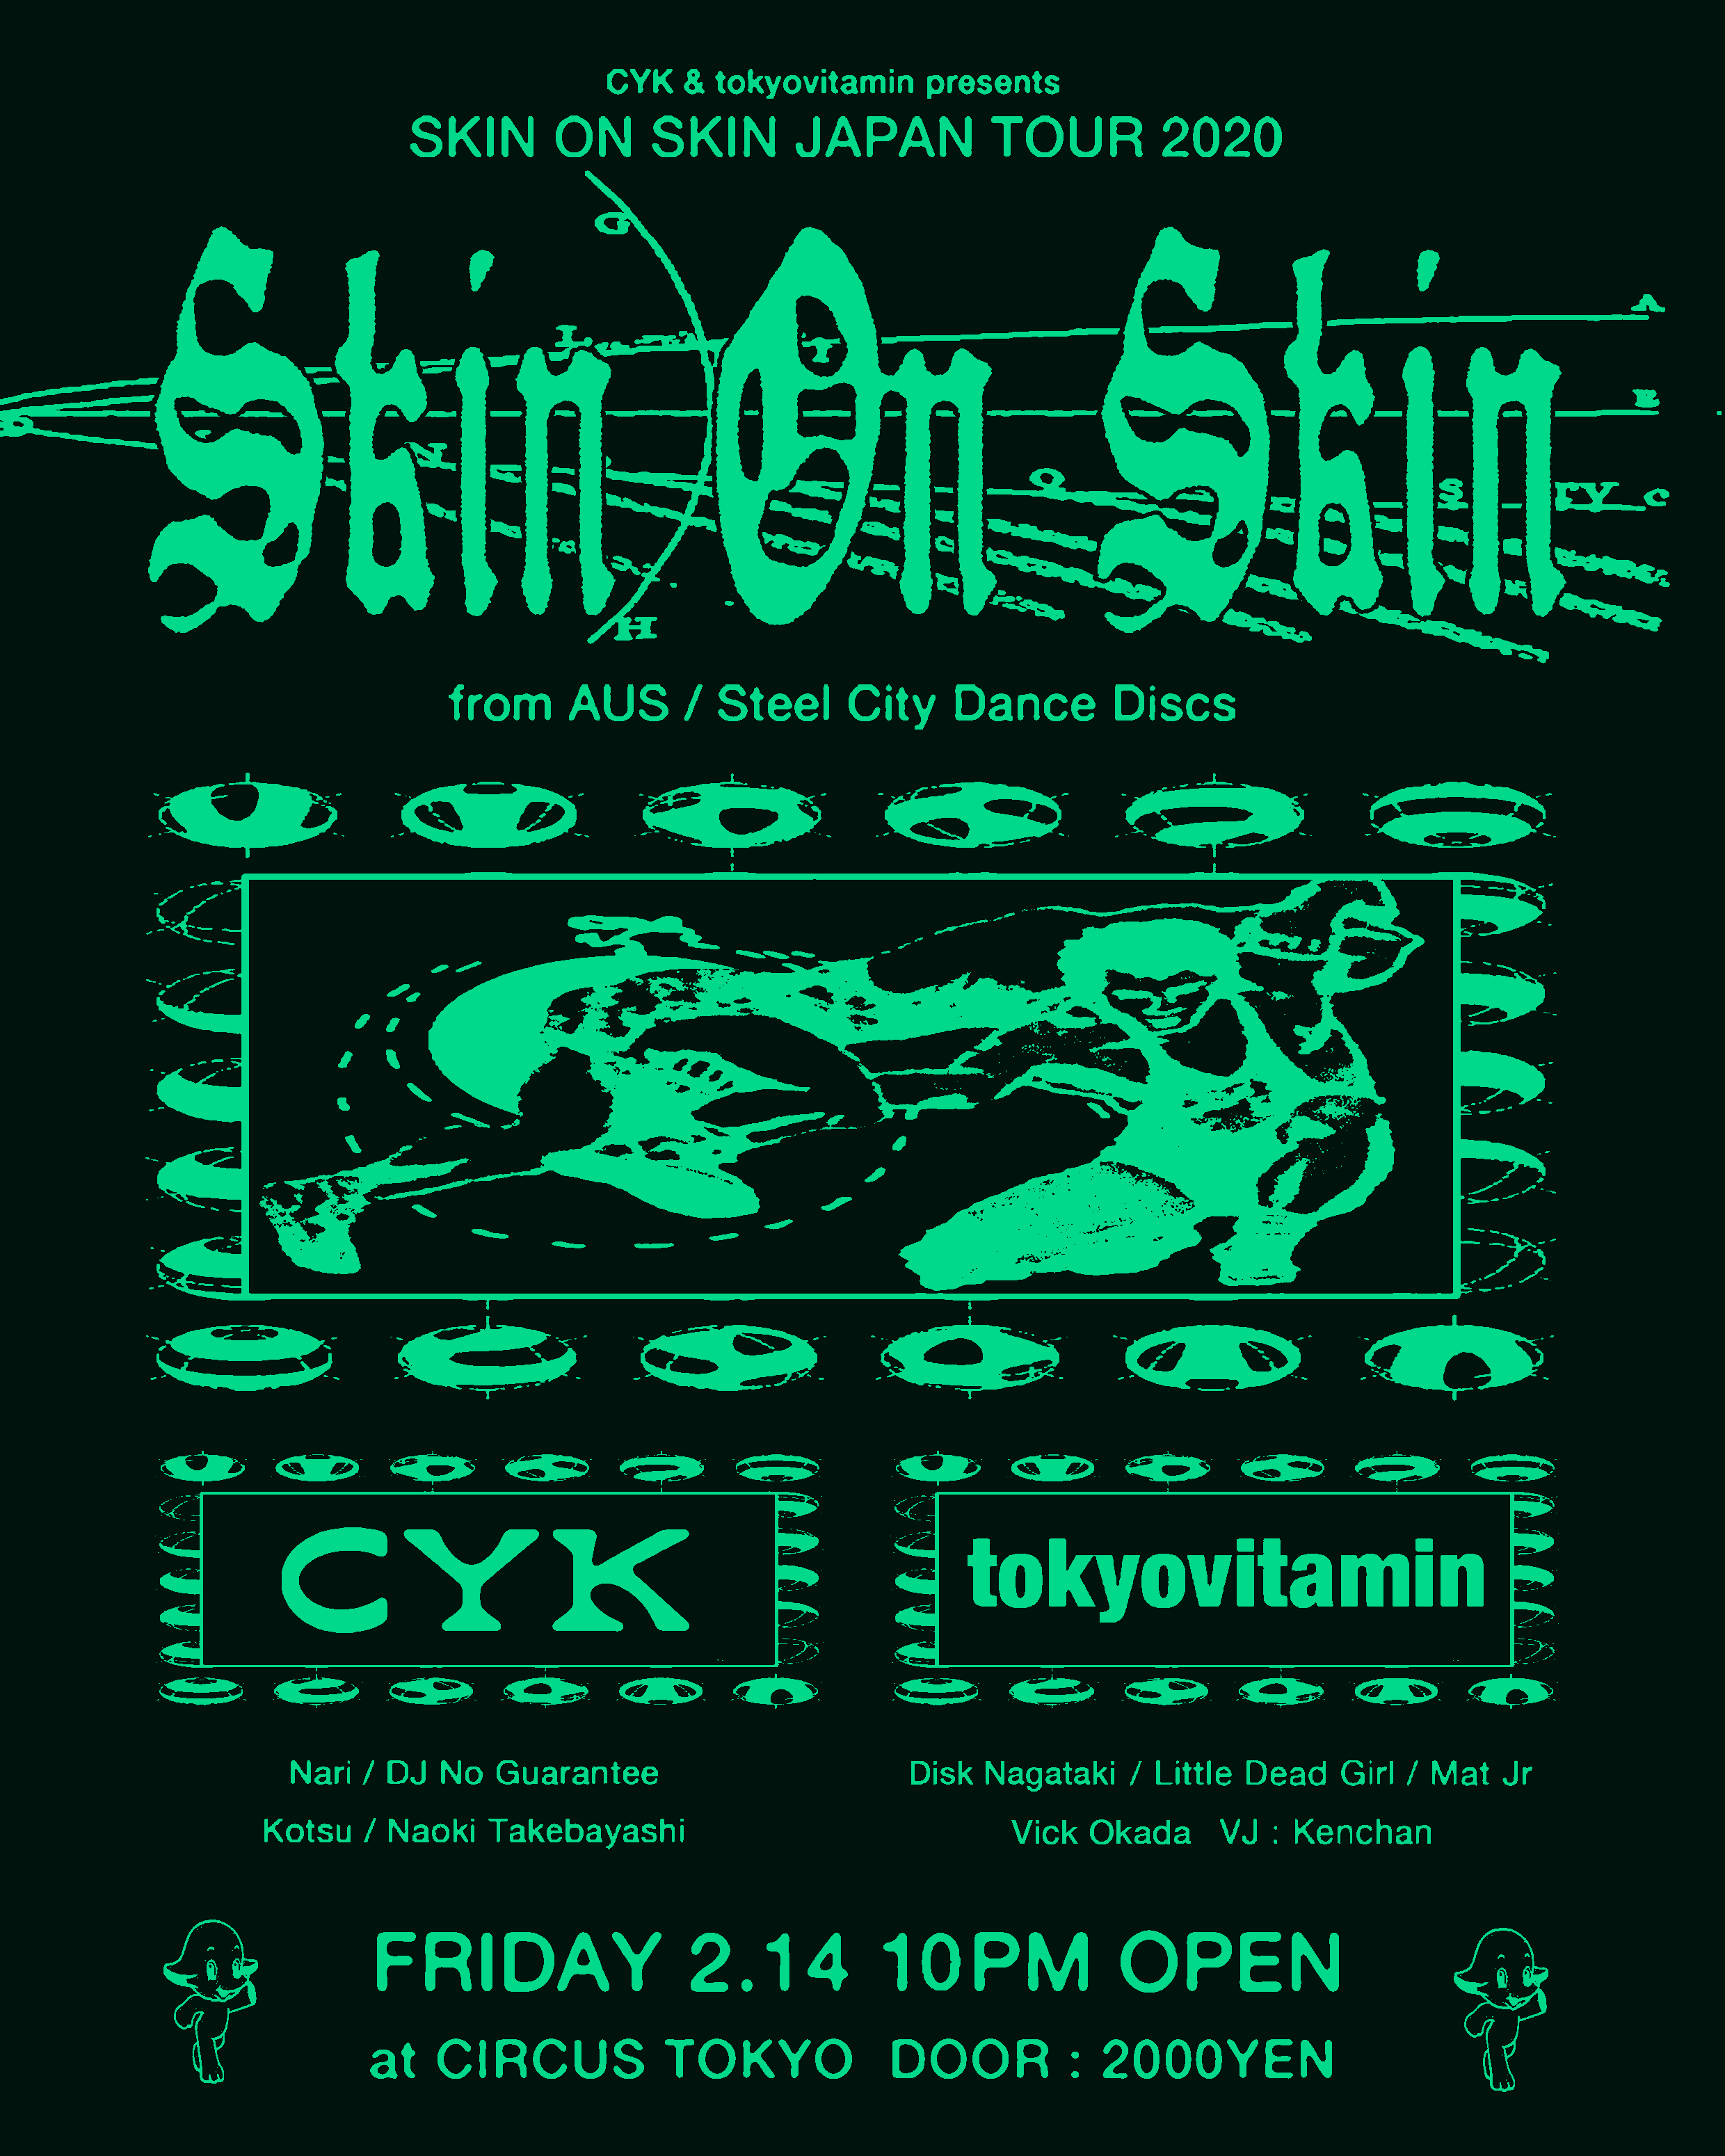 Skin On Skin Japan Tour 2020 presented by CYK & tokyovitamin